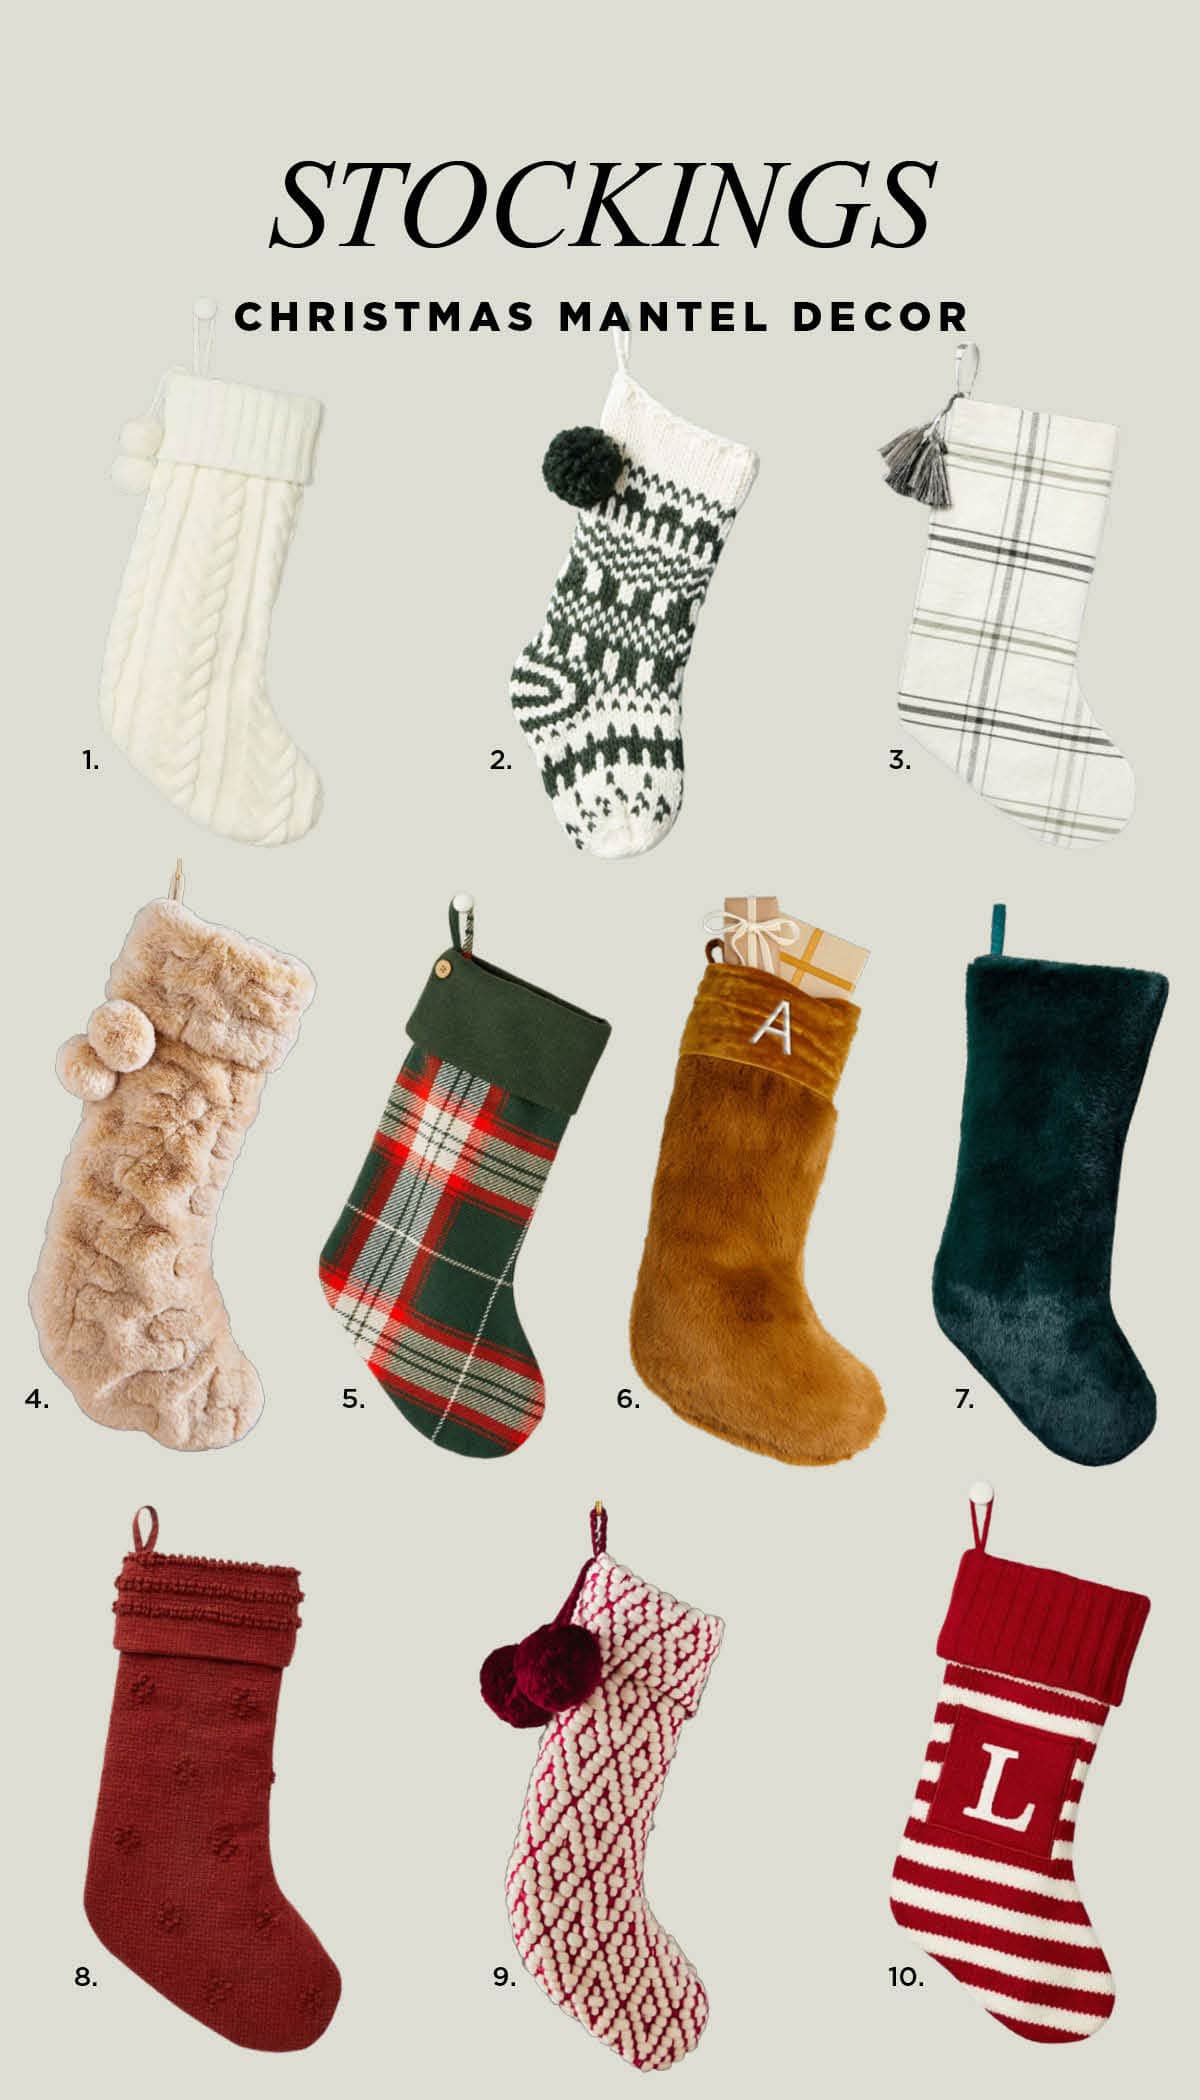 Stylish Stockings for Your Christmas Mantel Decor